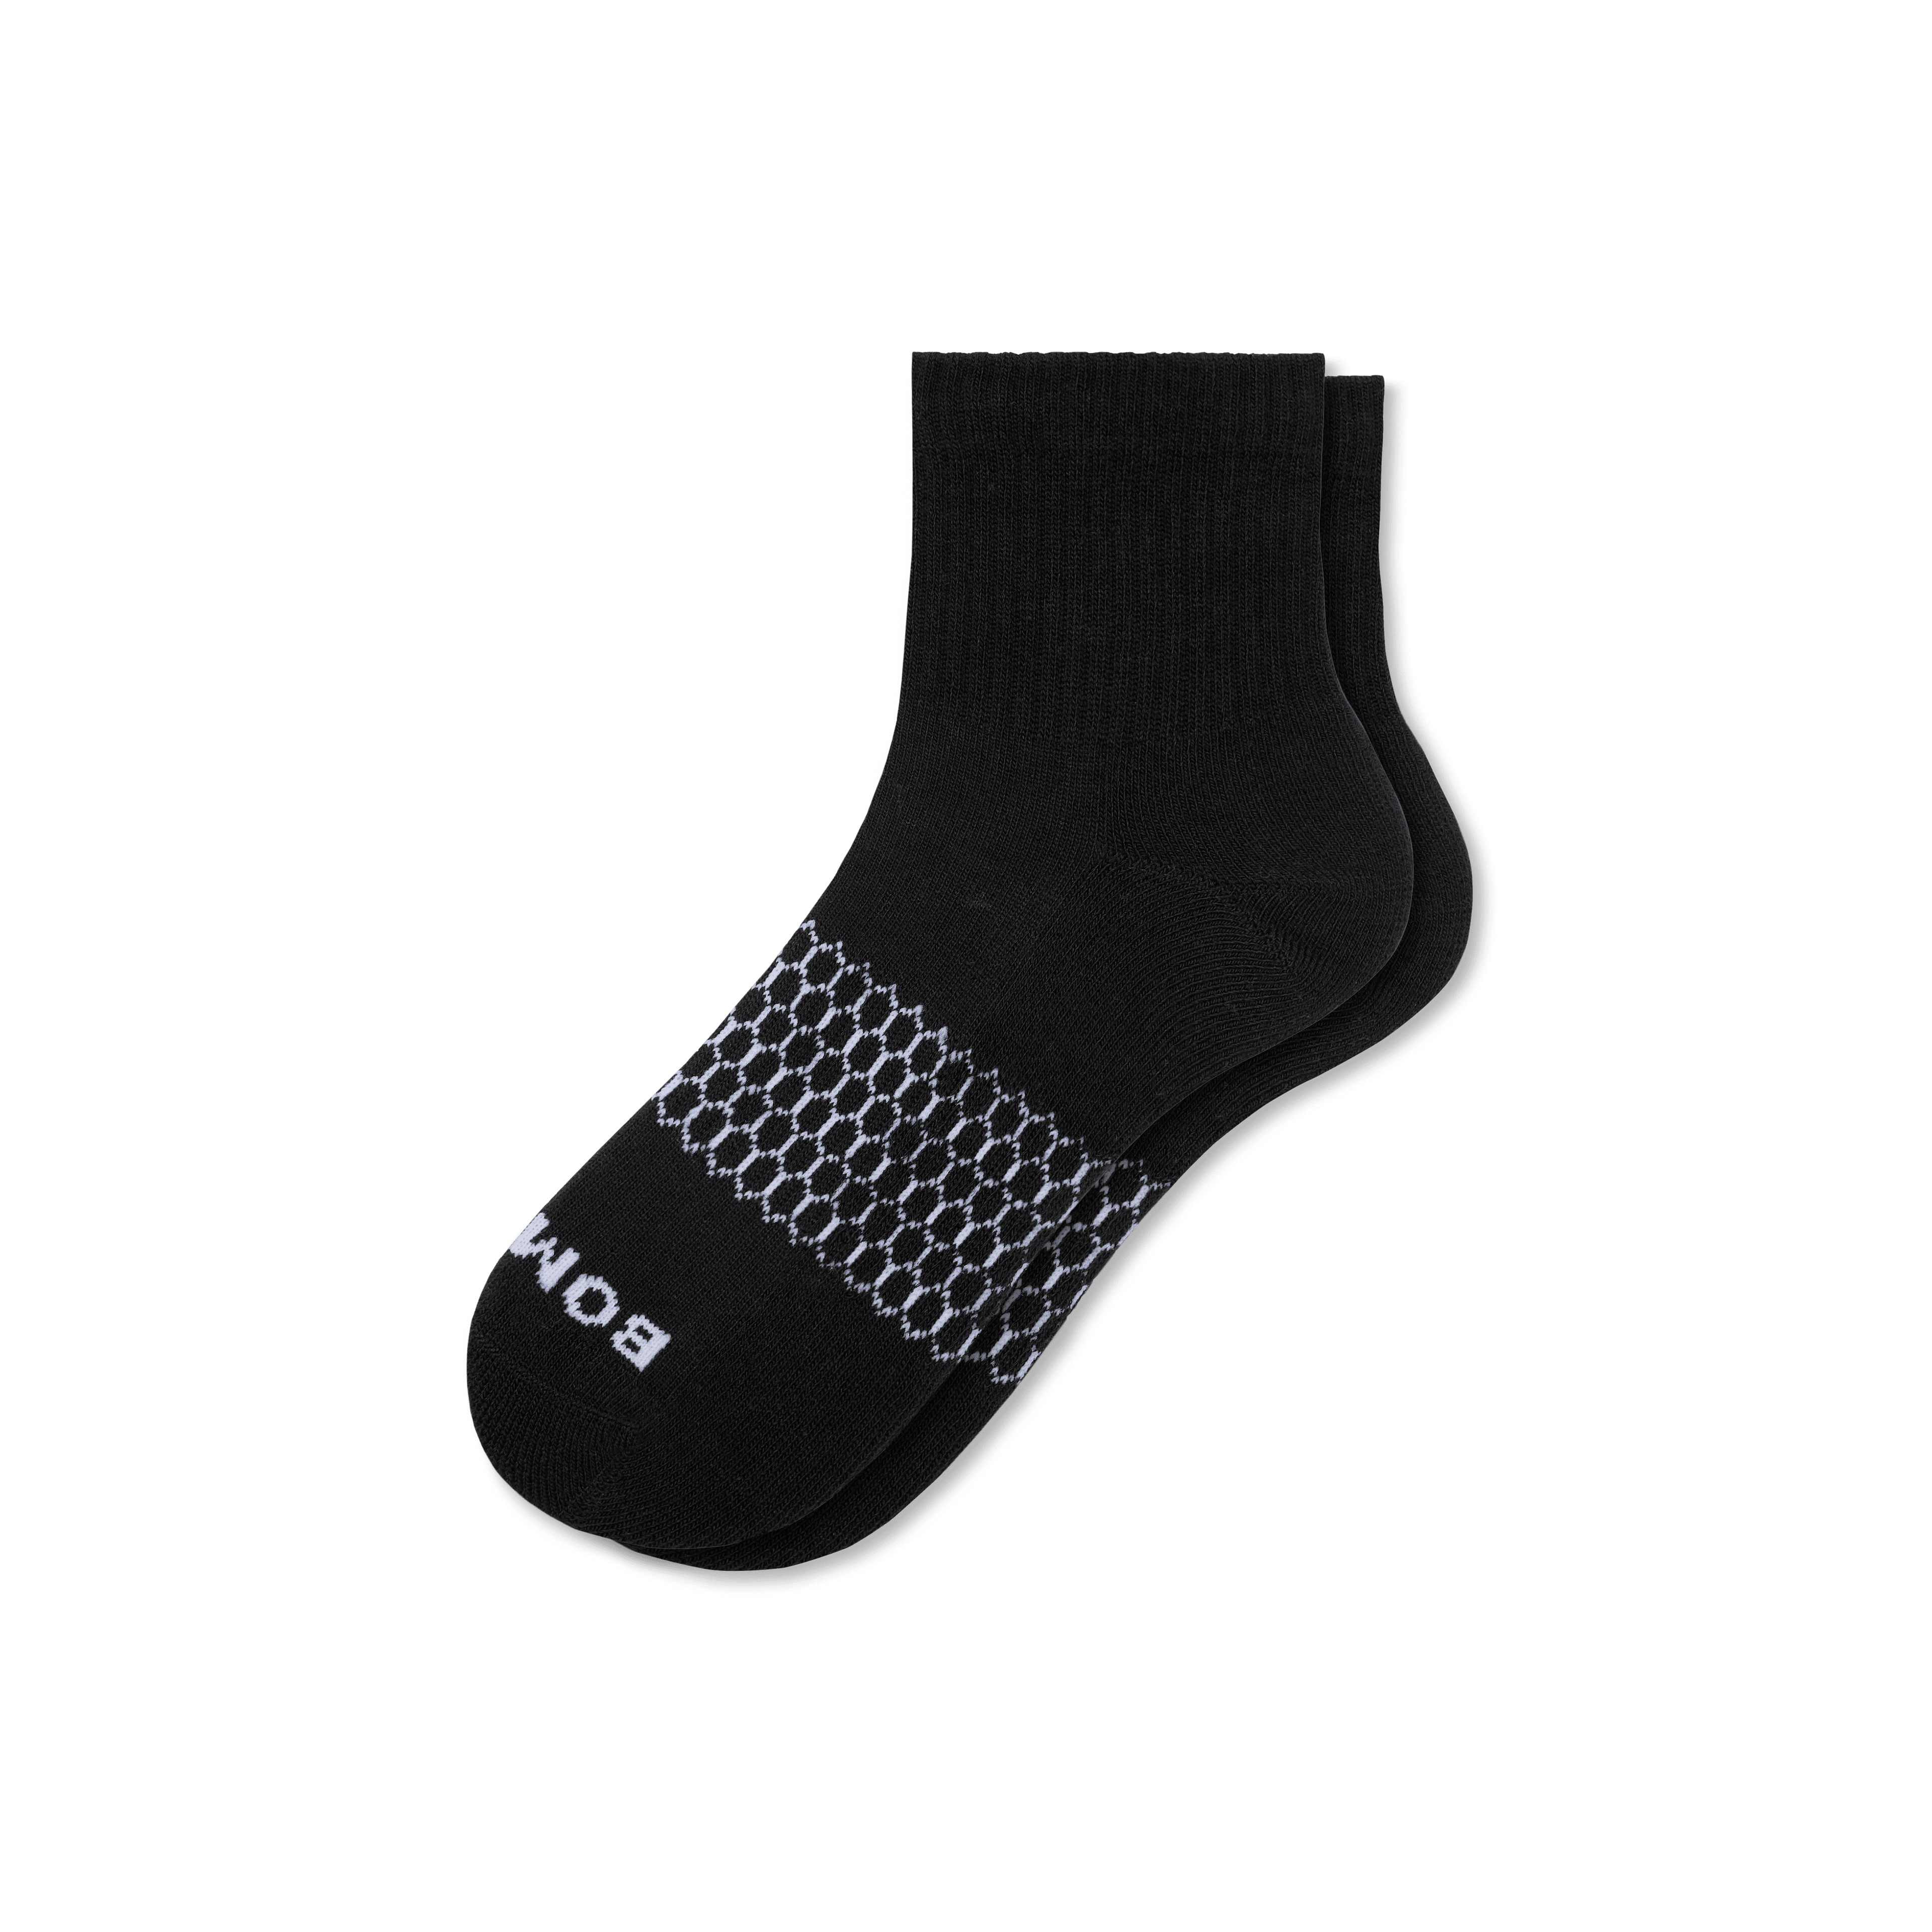 Bombas Sure-Fit Cuff Quarter Socks